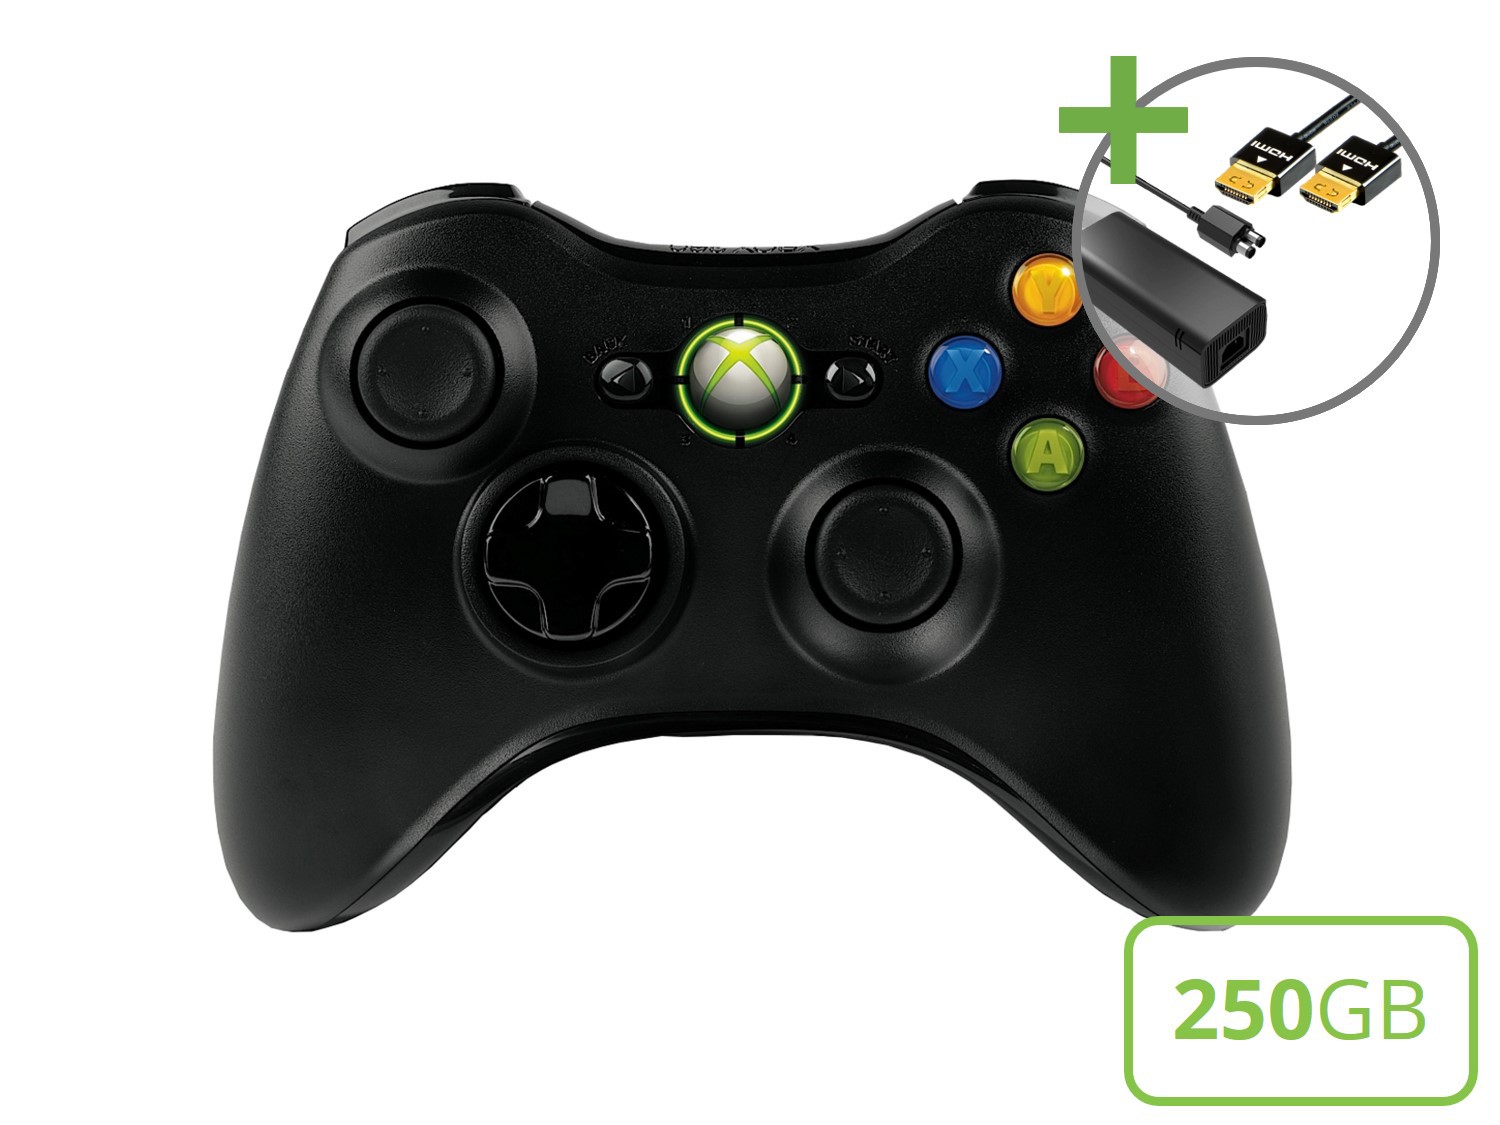 Microsoft Xbox 360 Slim Starter Pack - Forza 3 and Crisis 2 Edition - Xbox 360 Hardware - 4